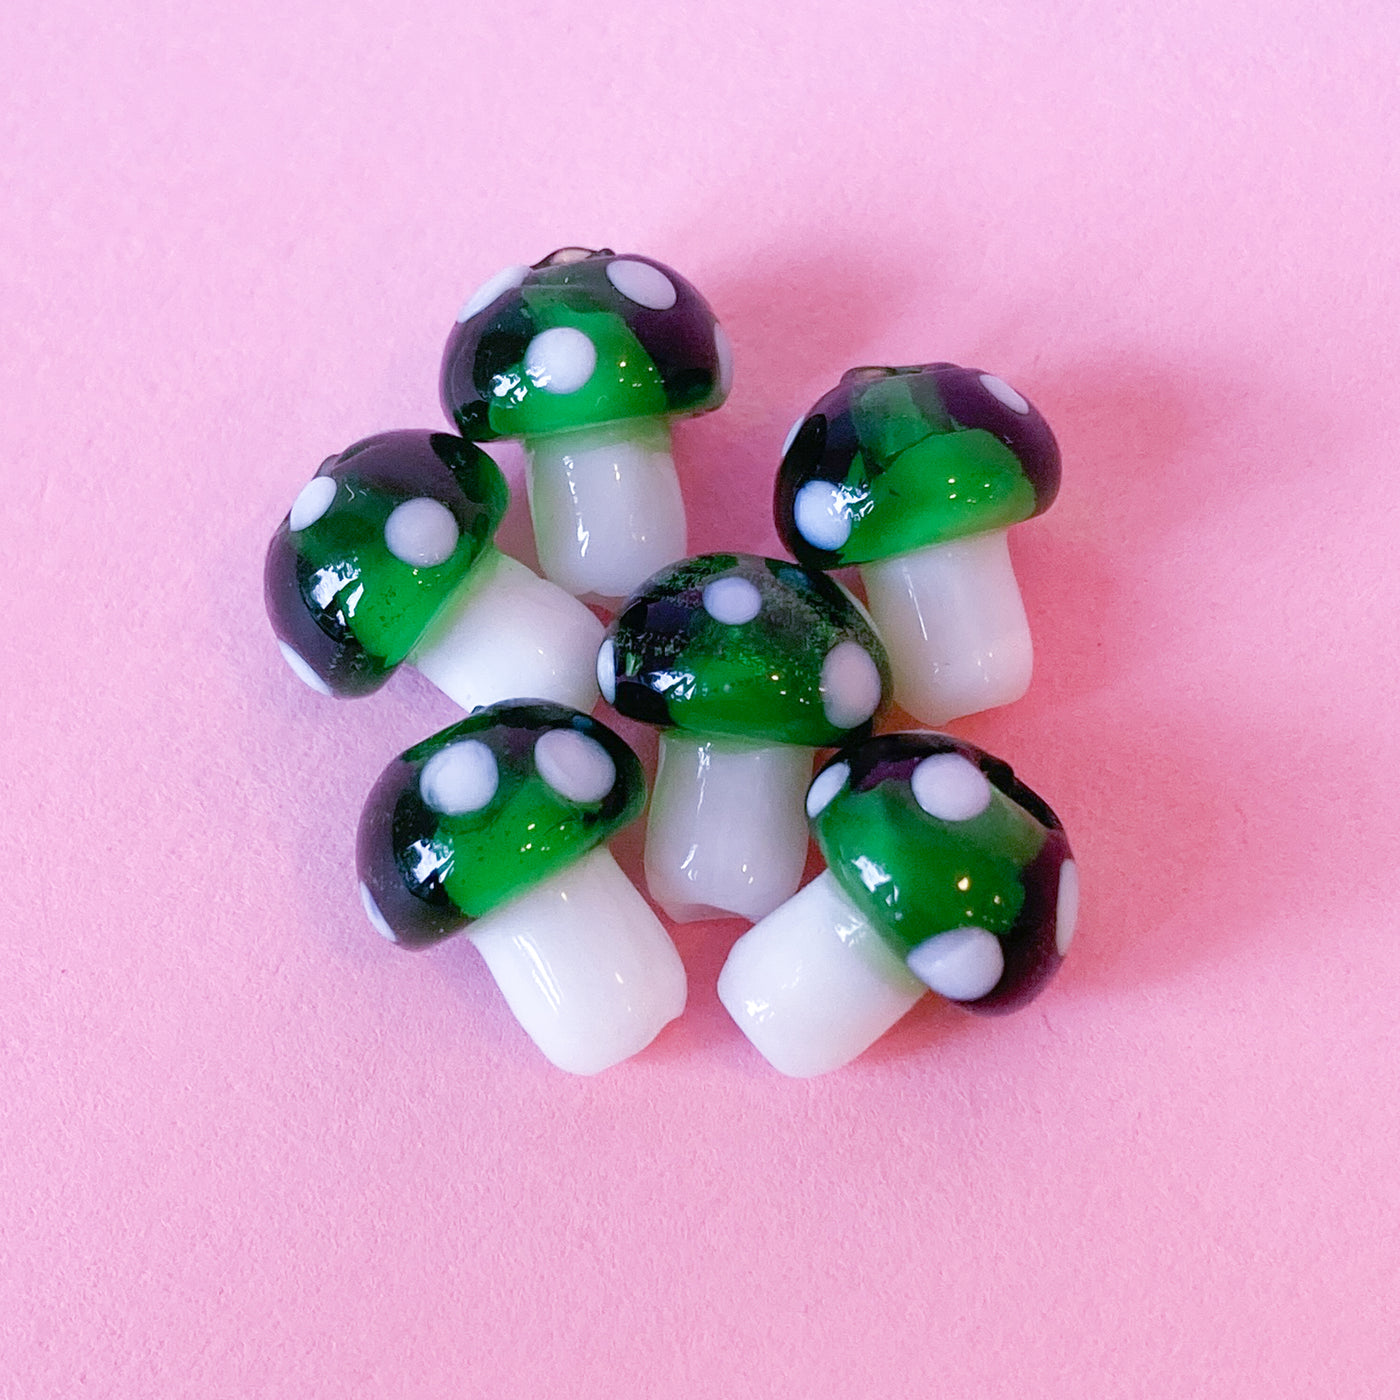 Glass mushroom beads in green